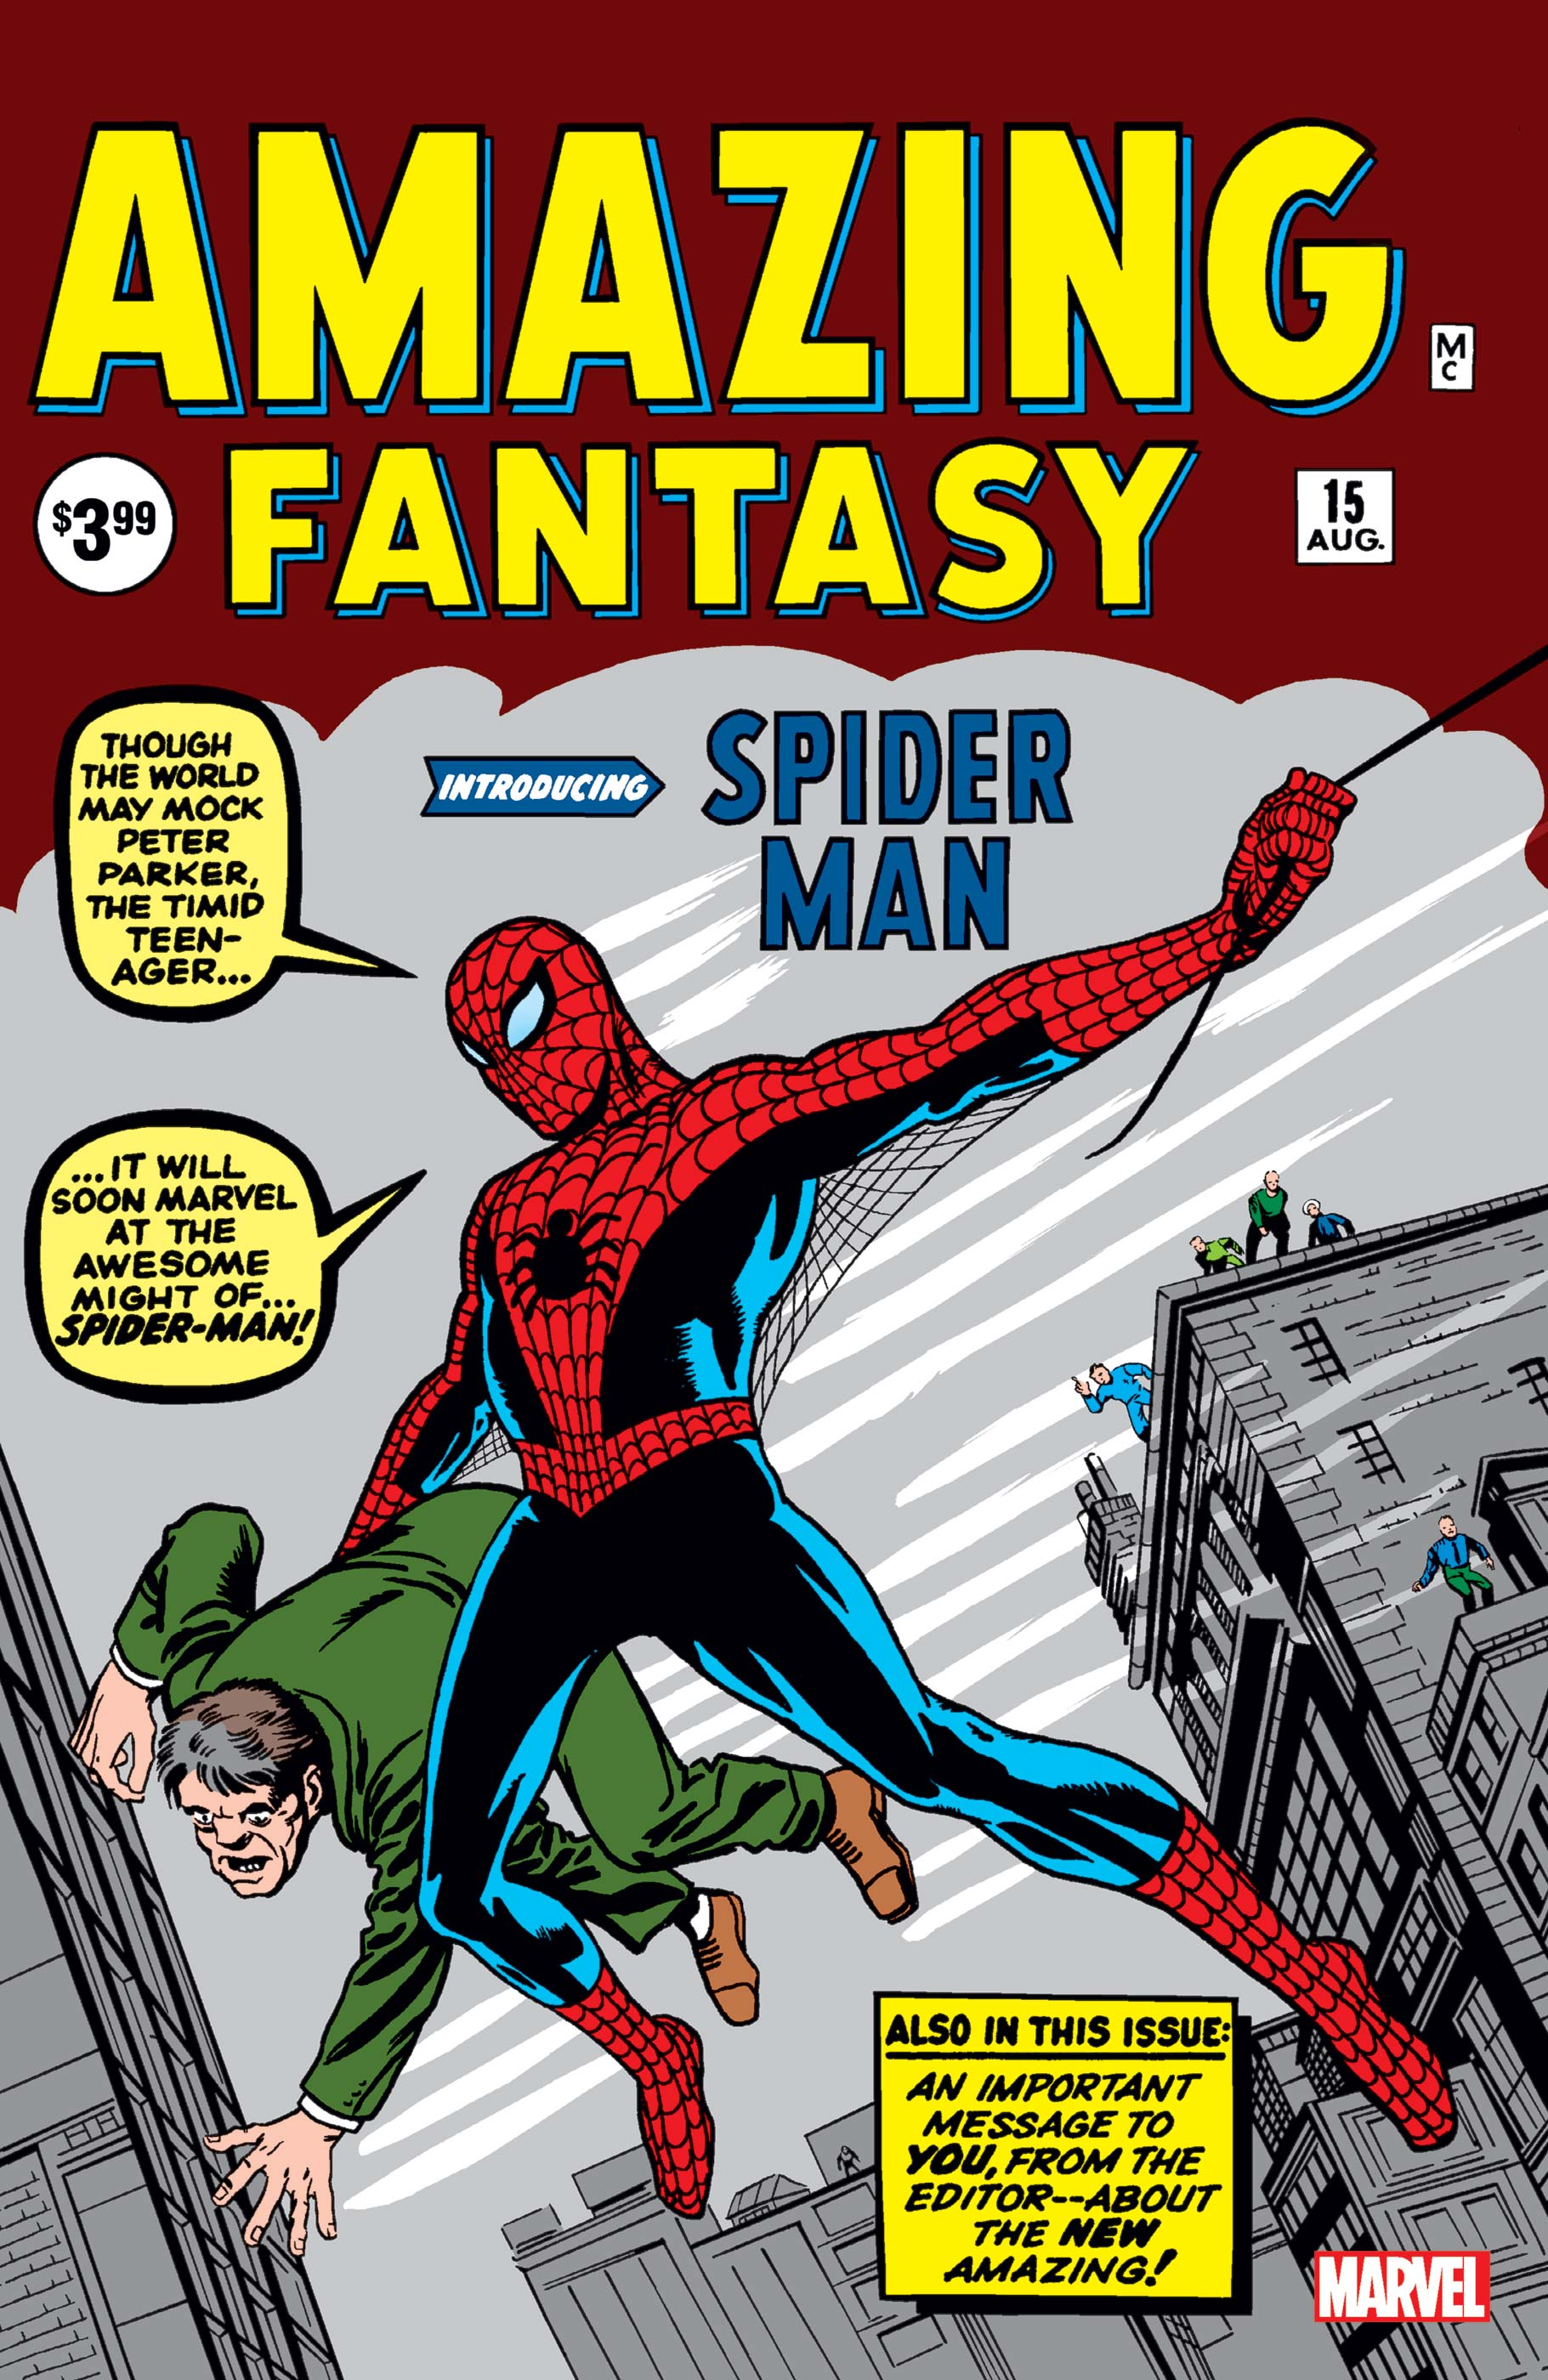 Amazing fantasy spider man